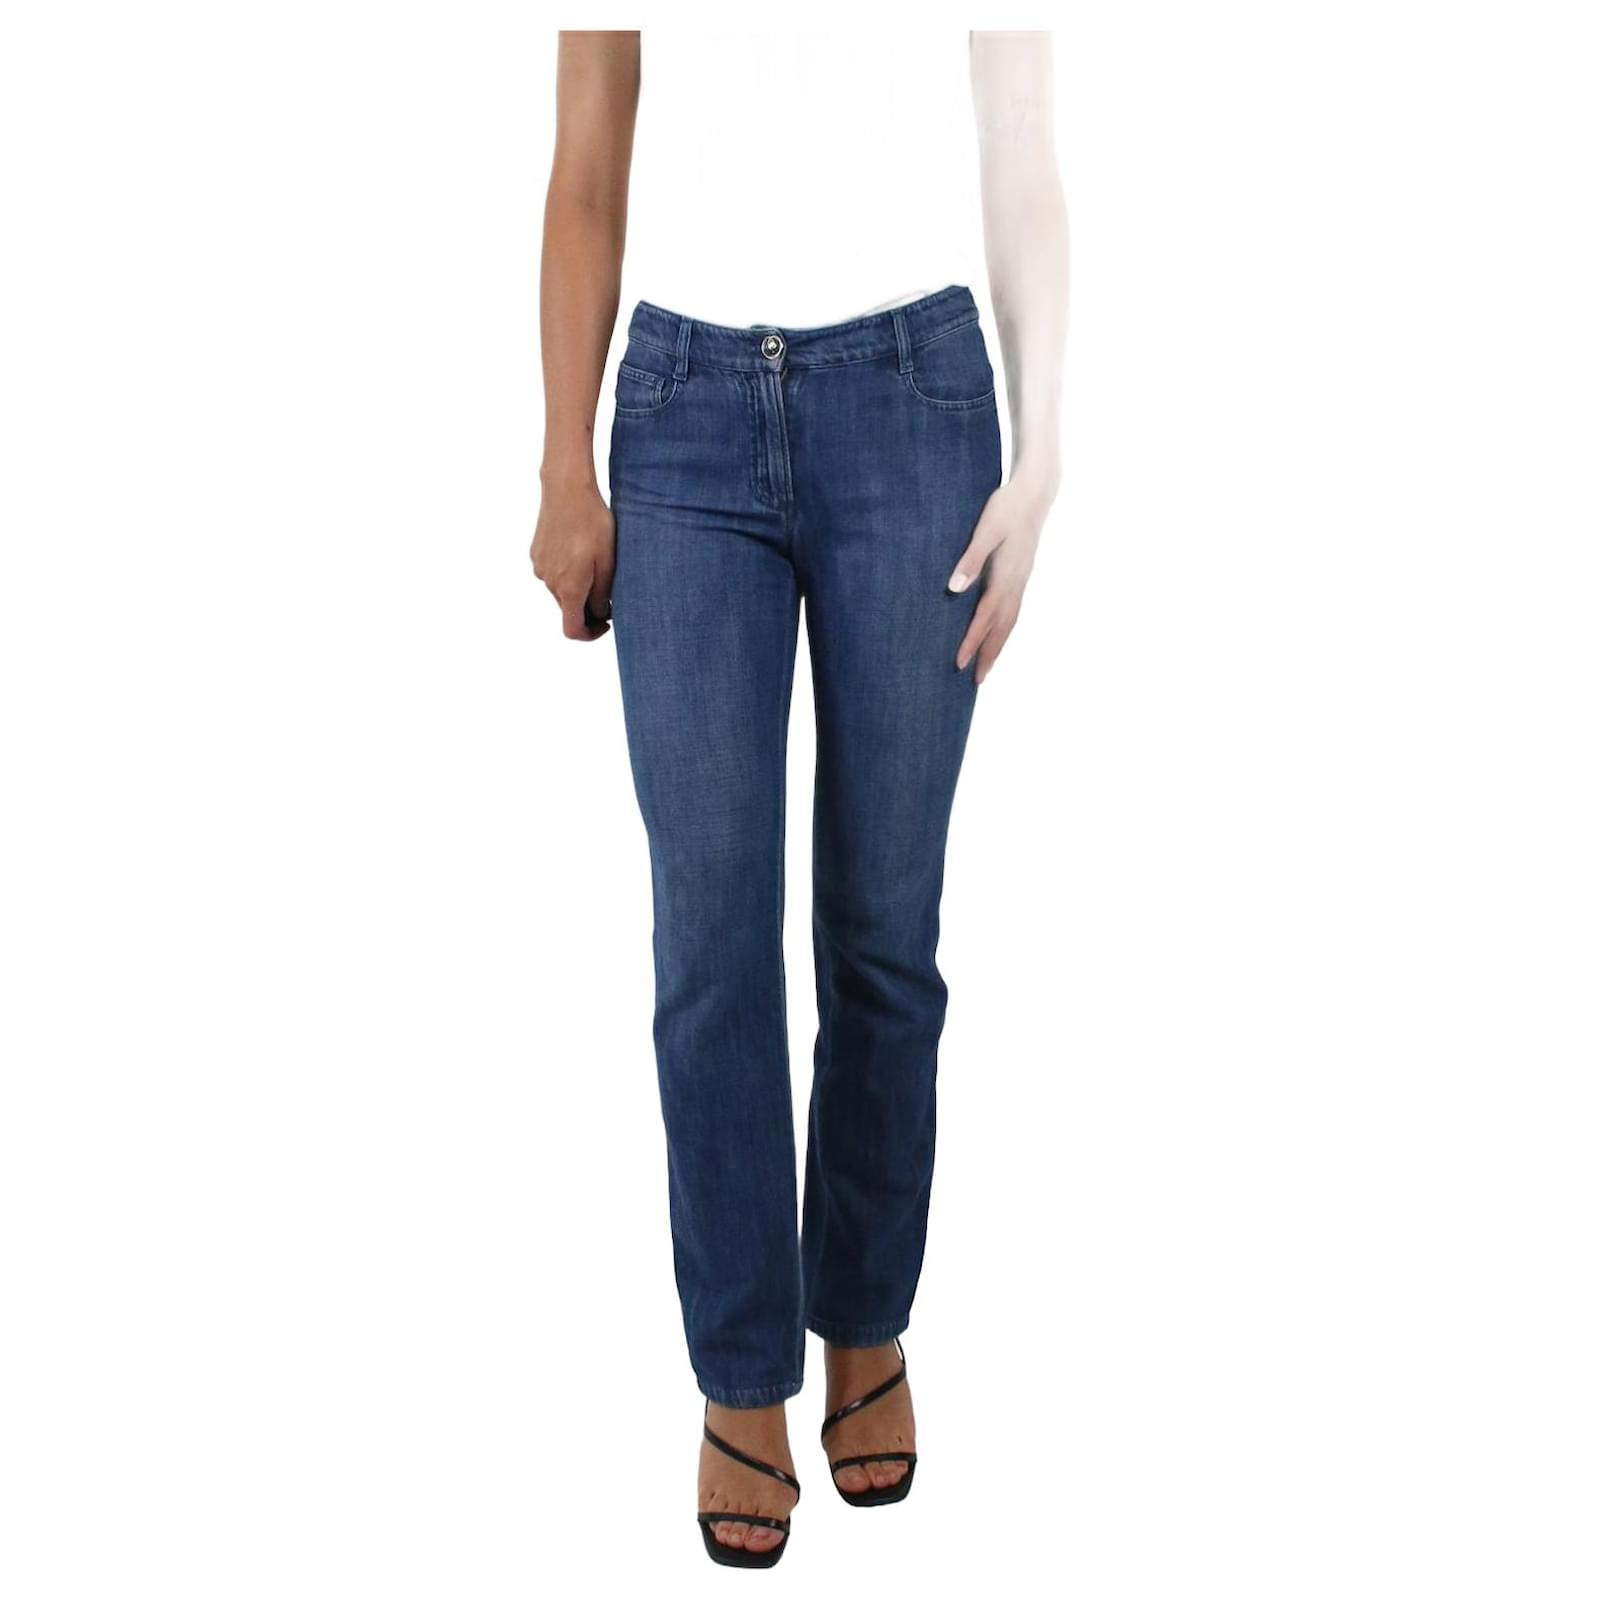 Blue mid-wash jeans - size FR 36